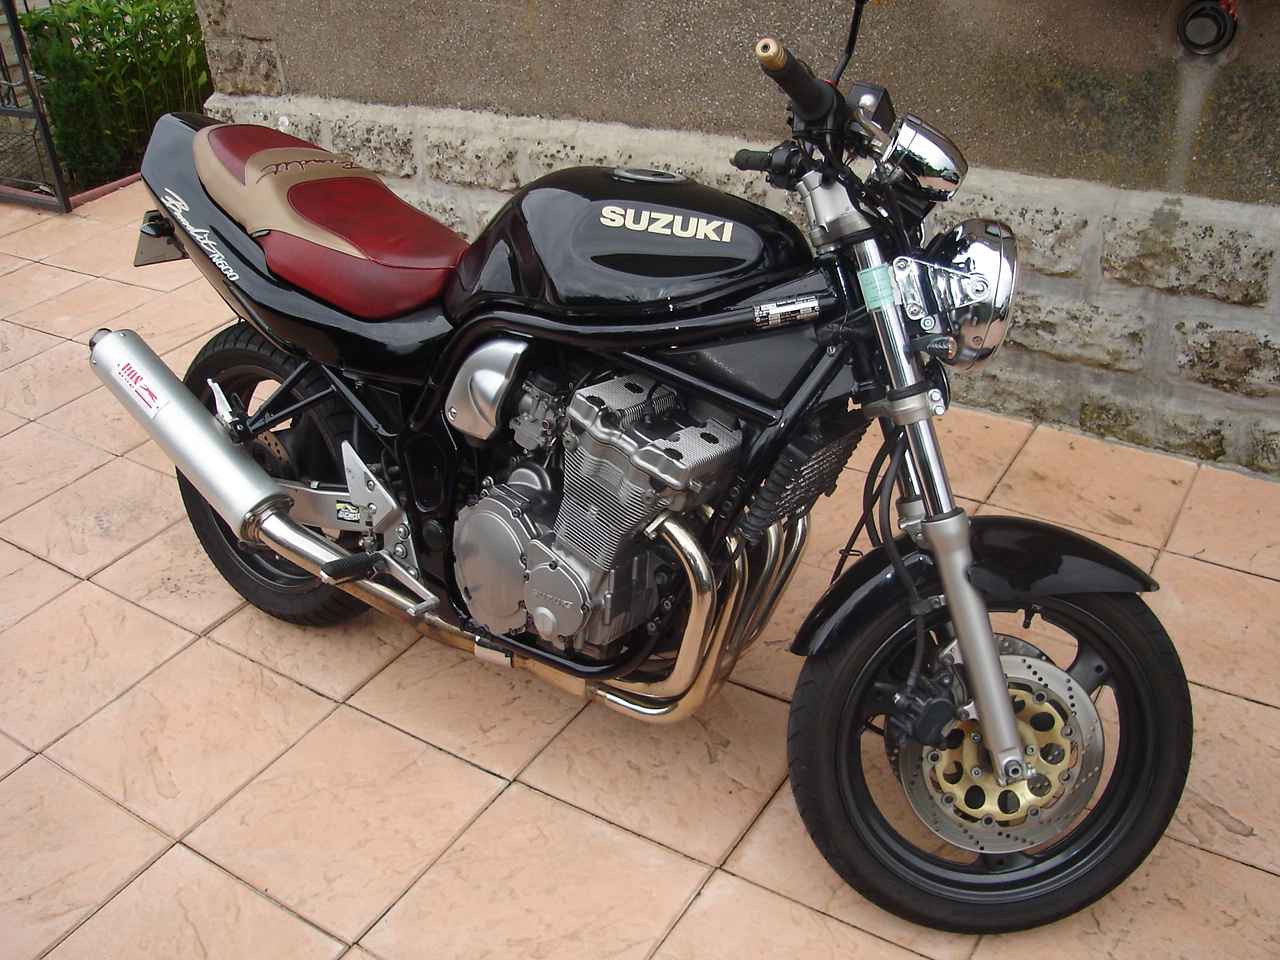 Suzuki Bandit 600 Motorcycles Image